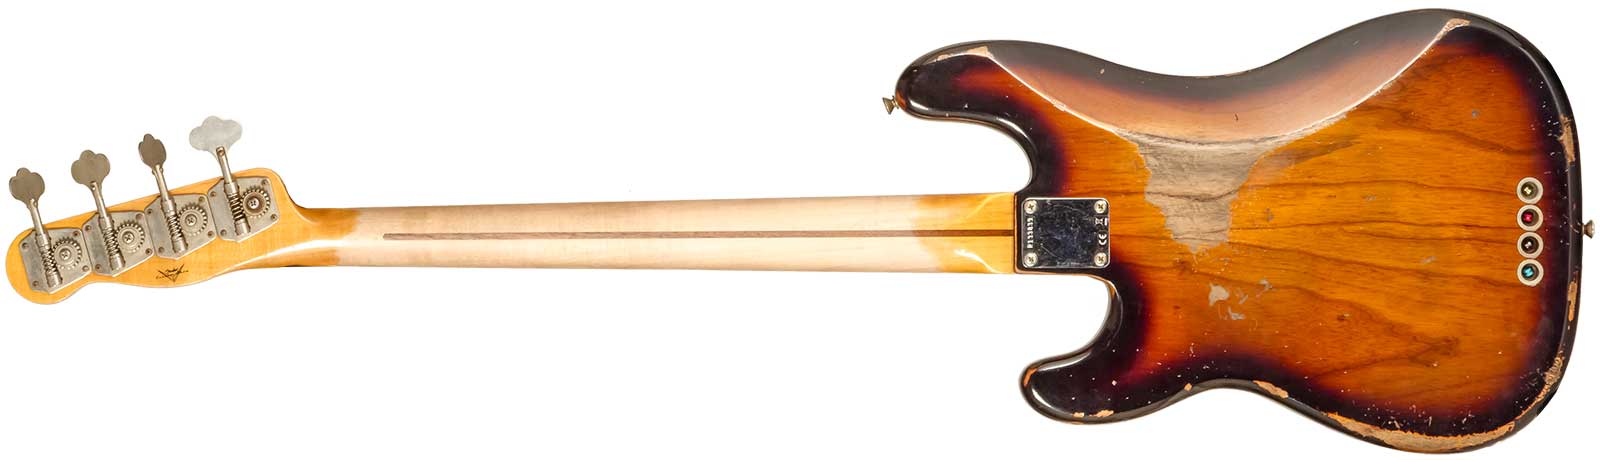 Fender Custom Shop Precision Bass 1955 Mn #r133839 - Heavy Relic 2-color Sunburst - Solid body electric bass - Variation 1